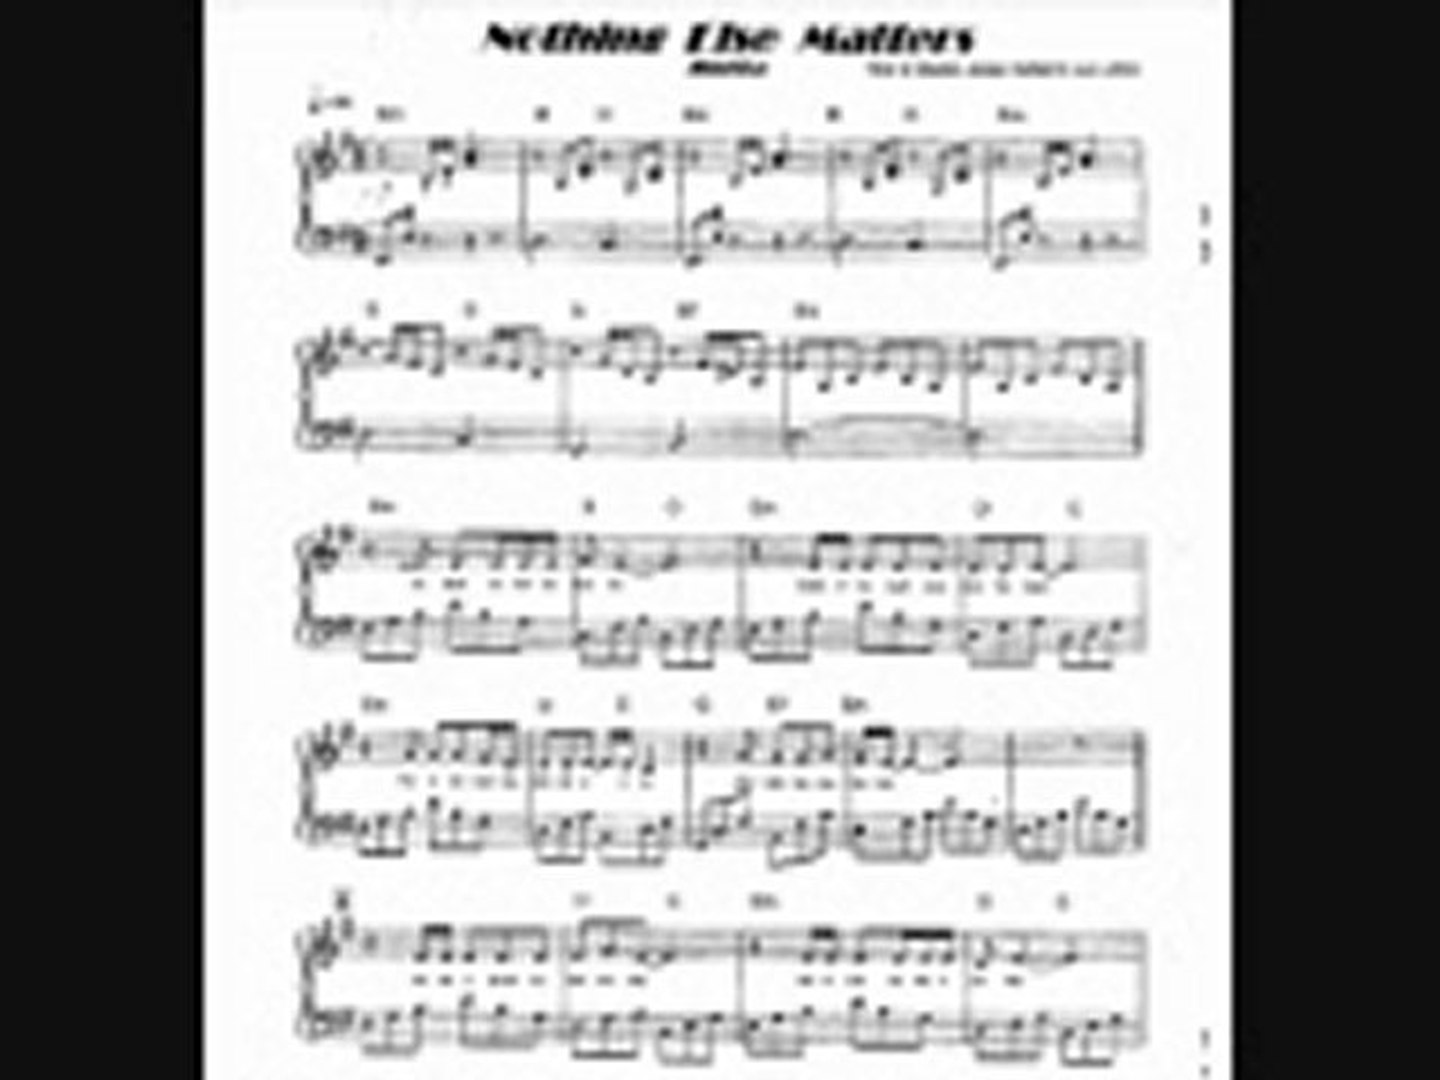 Metallica - Nothing Else Matters (piano sheet music) - Video Dailymotion